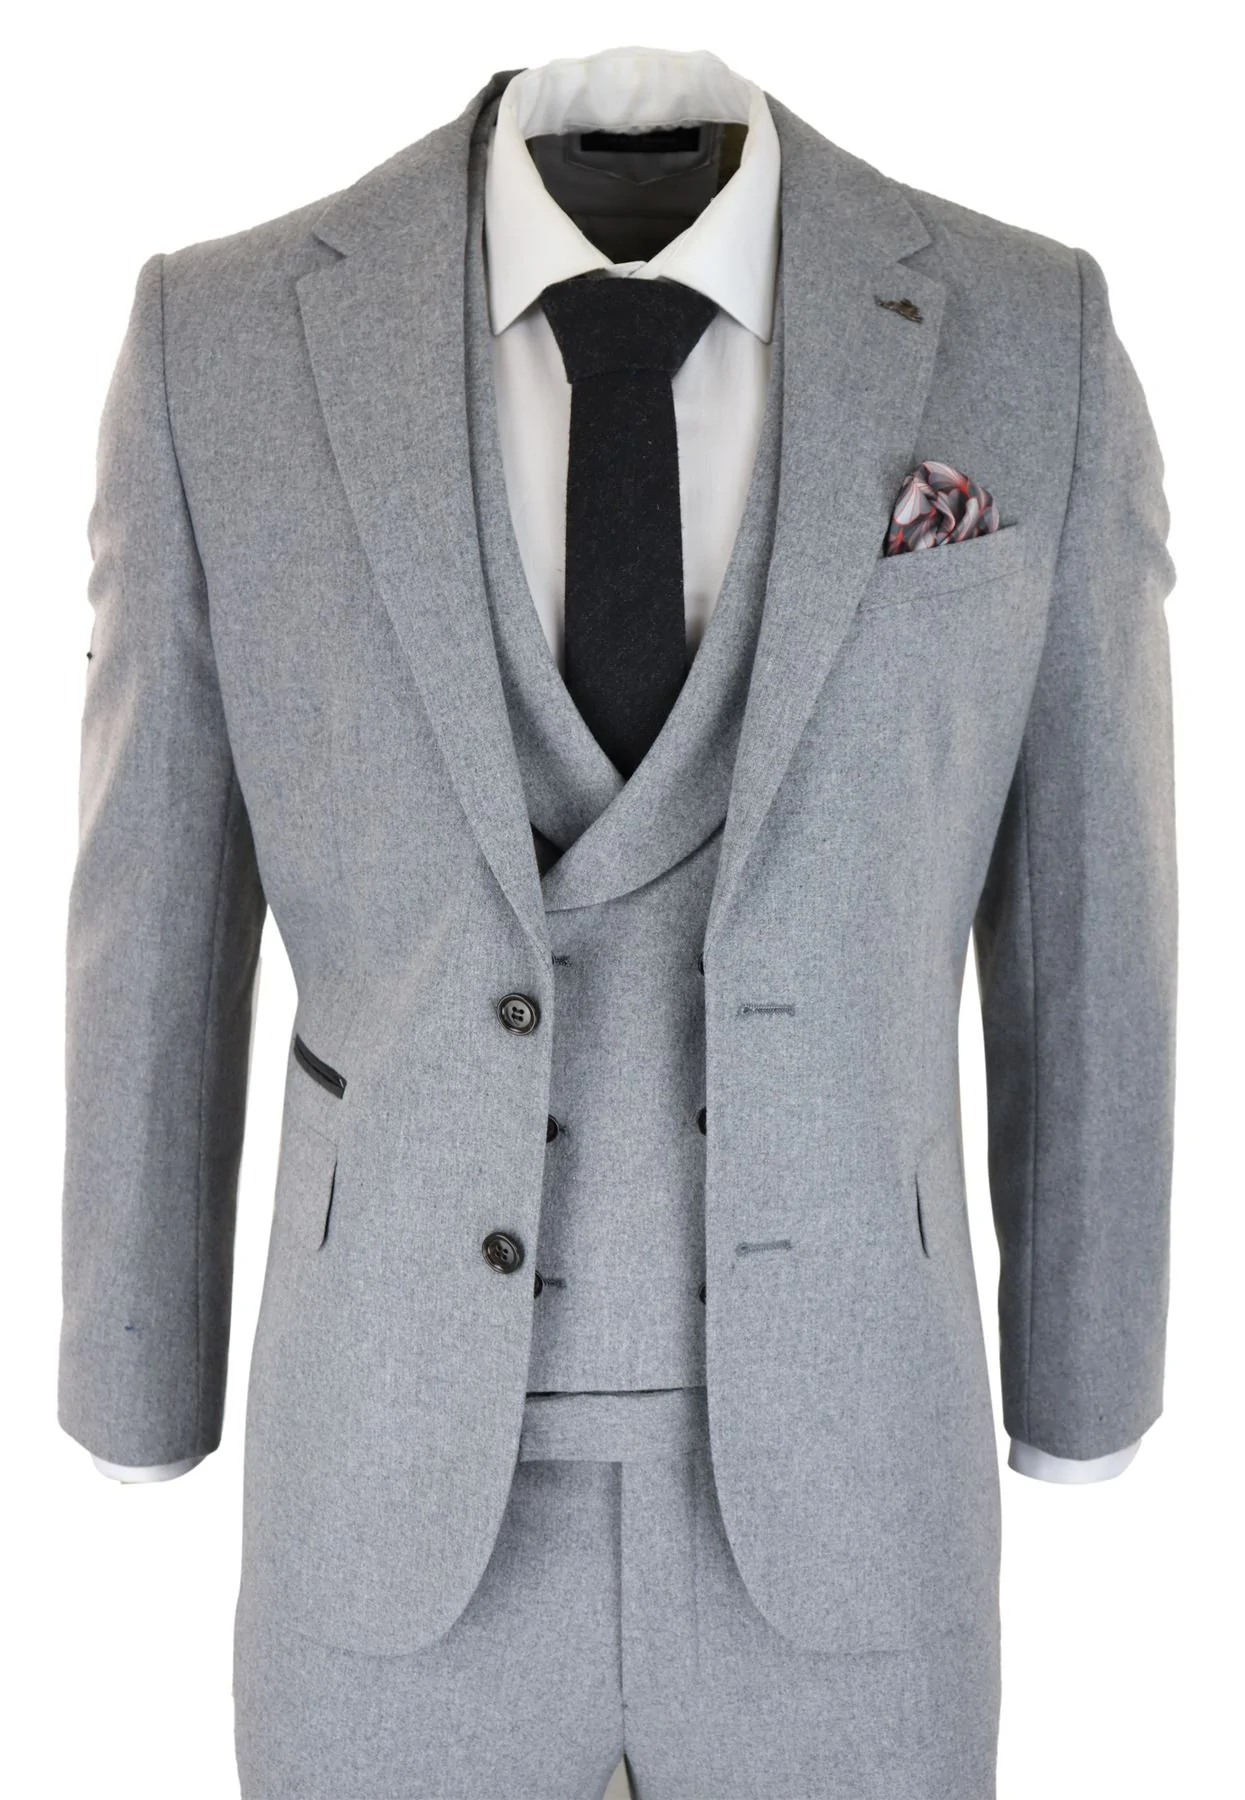 Drafting Details of Mens Vest / Waistcoat - Textile Learner